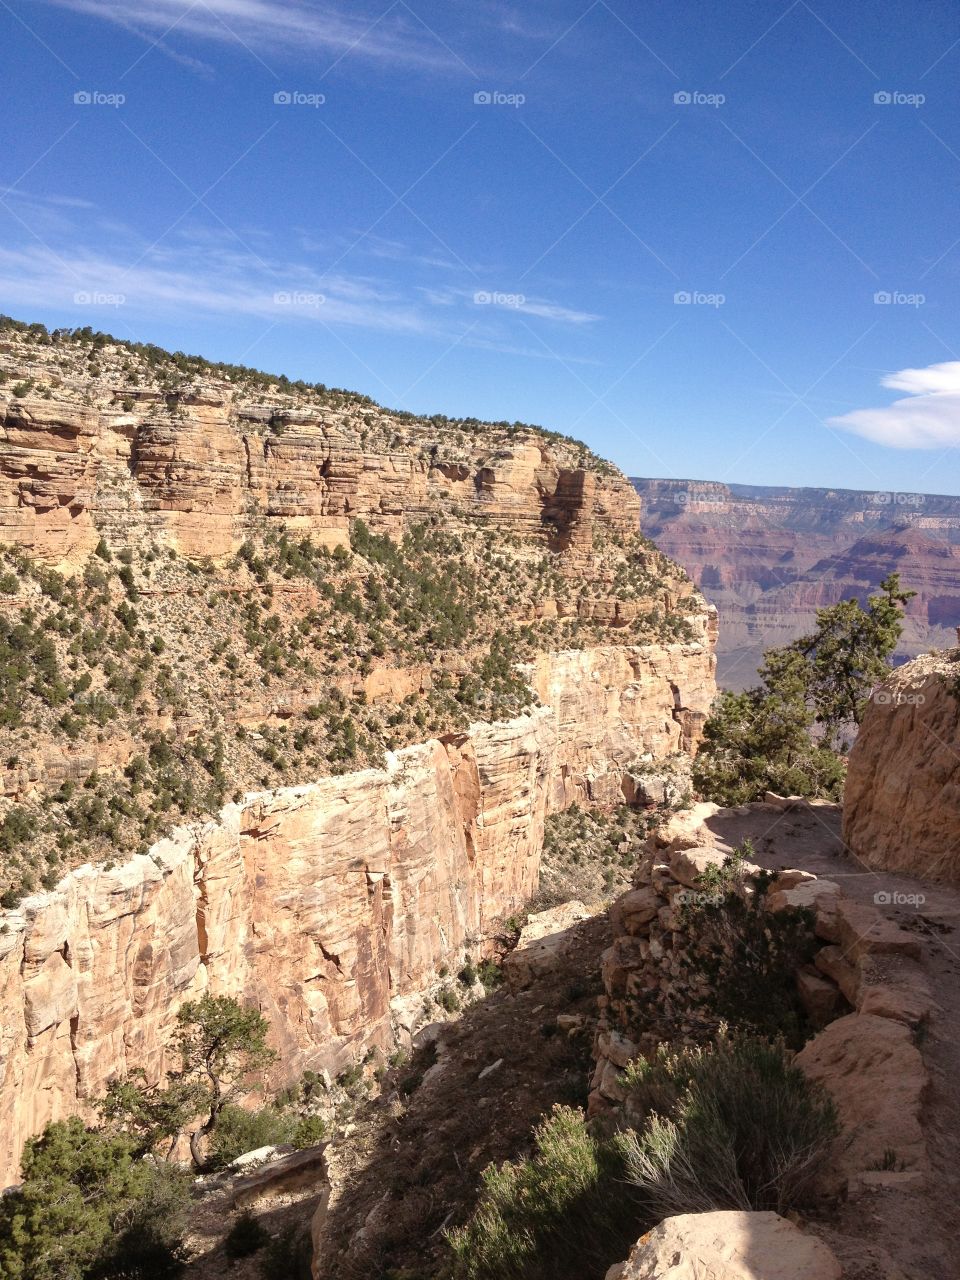 More good Grand Canyon stuff